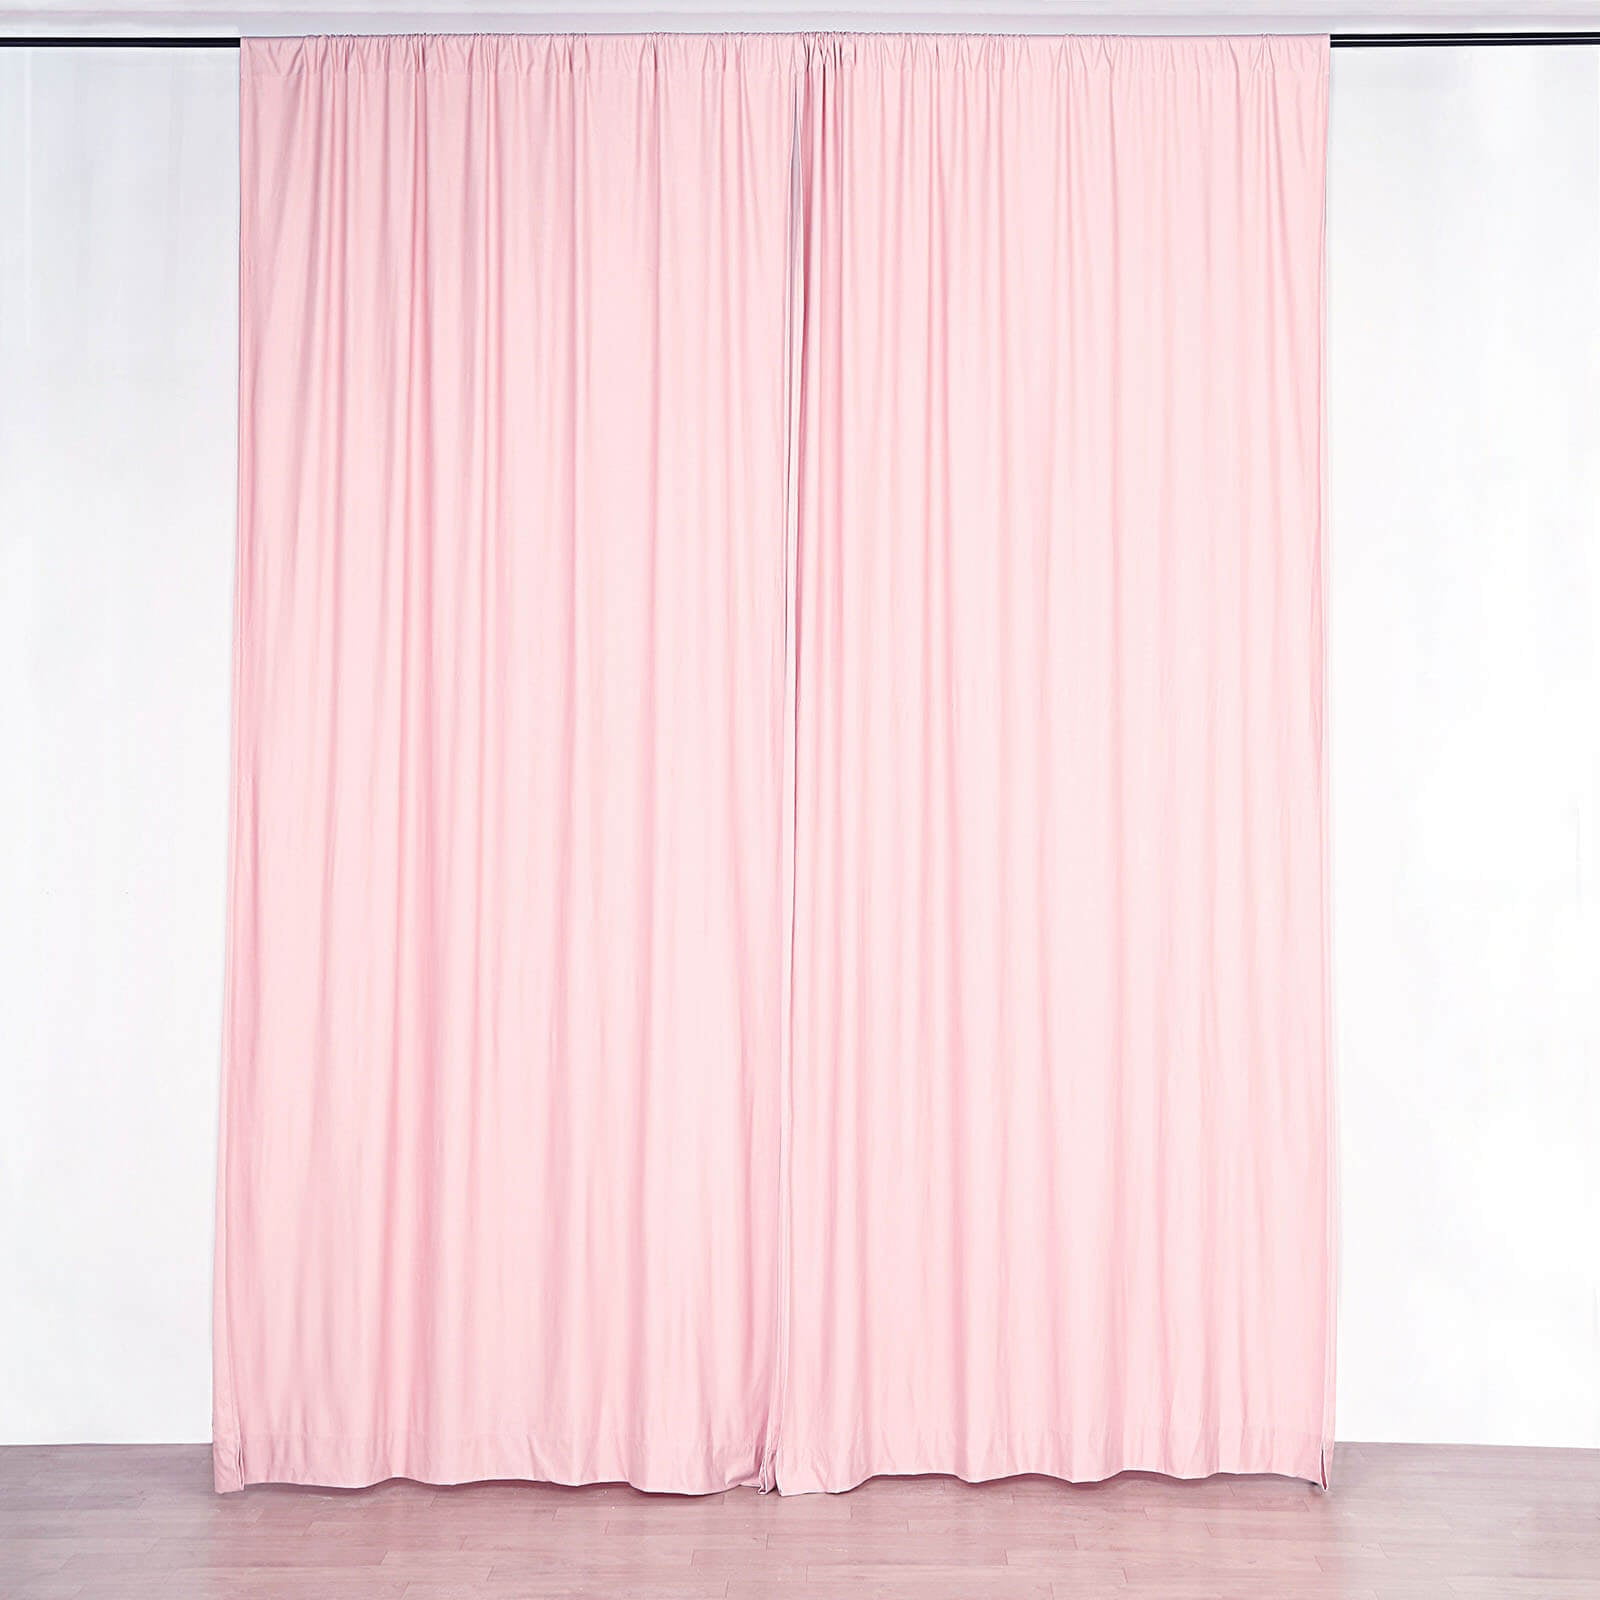 AK TRADING CO. 10 feet x 8 feet Polyester Backdrop Drapes Curtains 